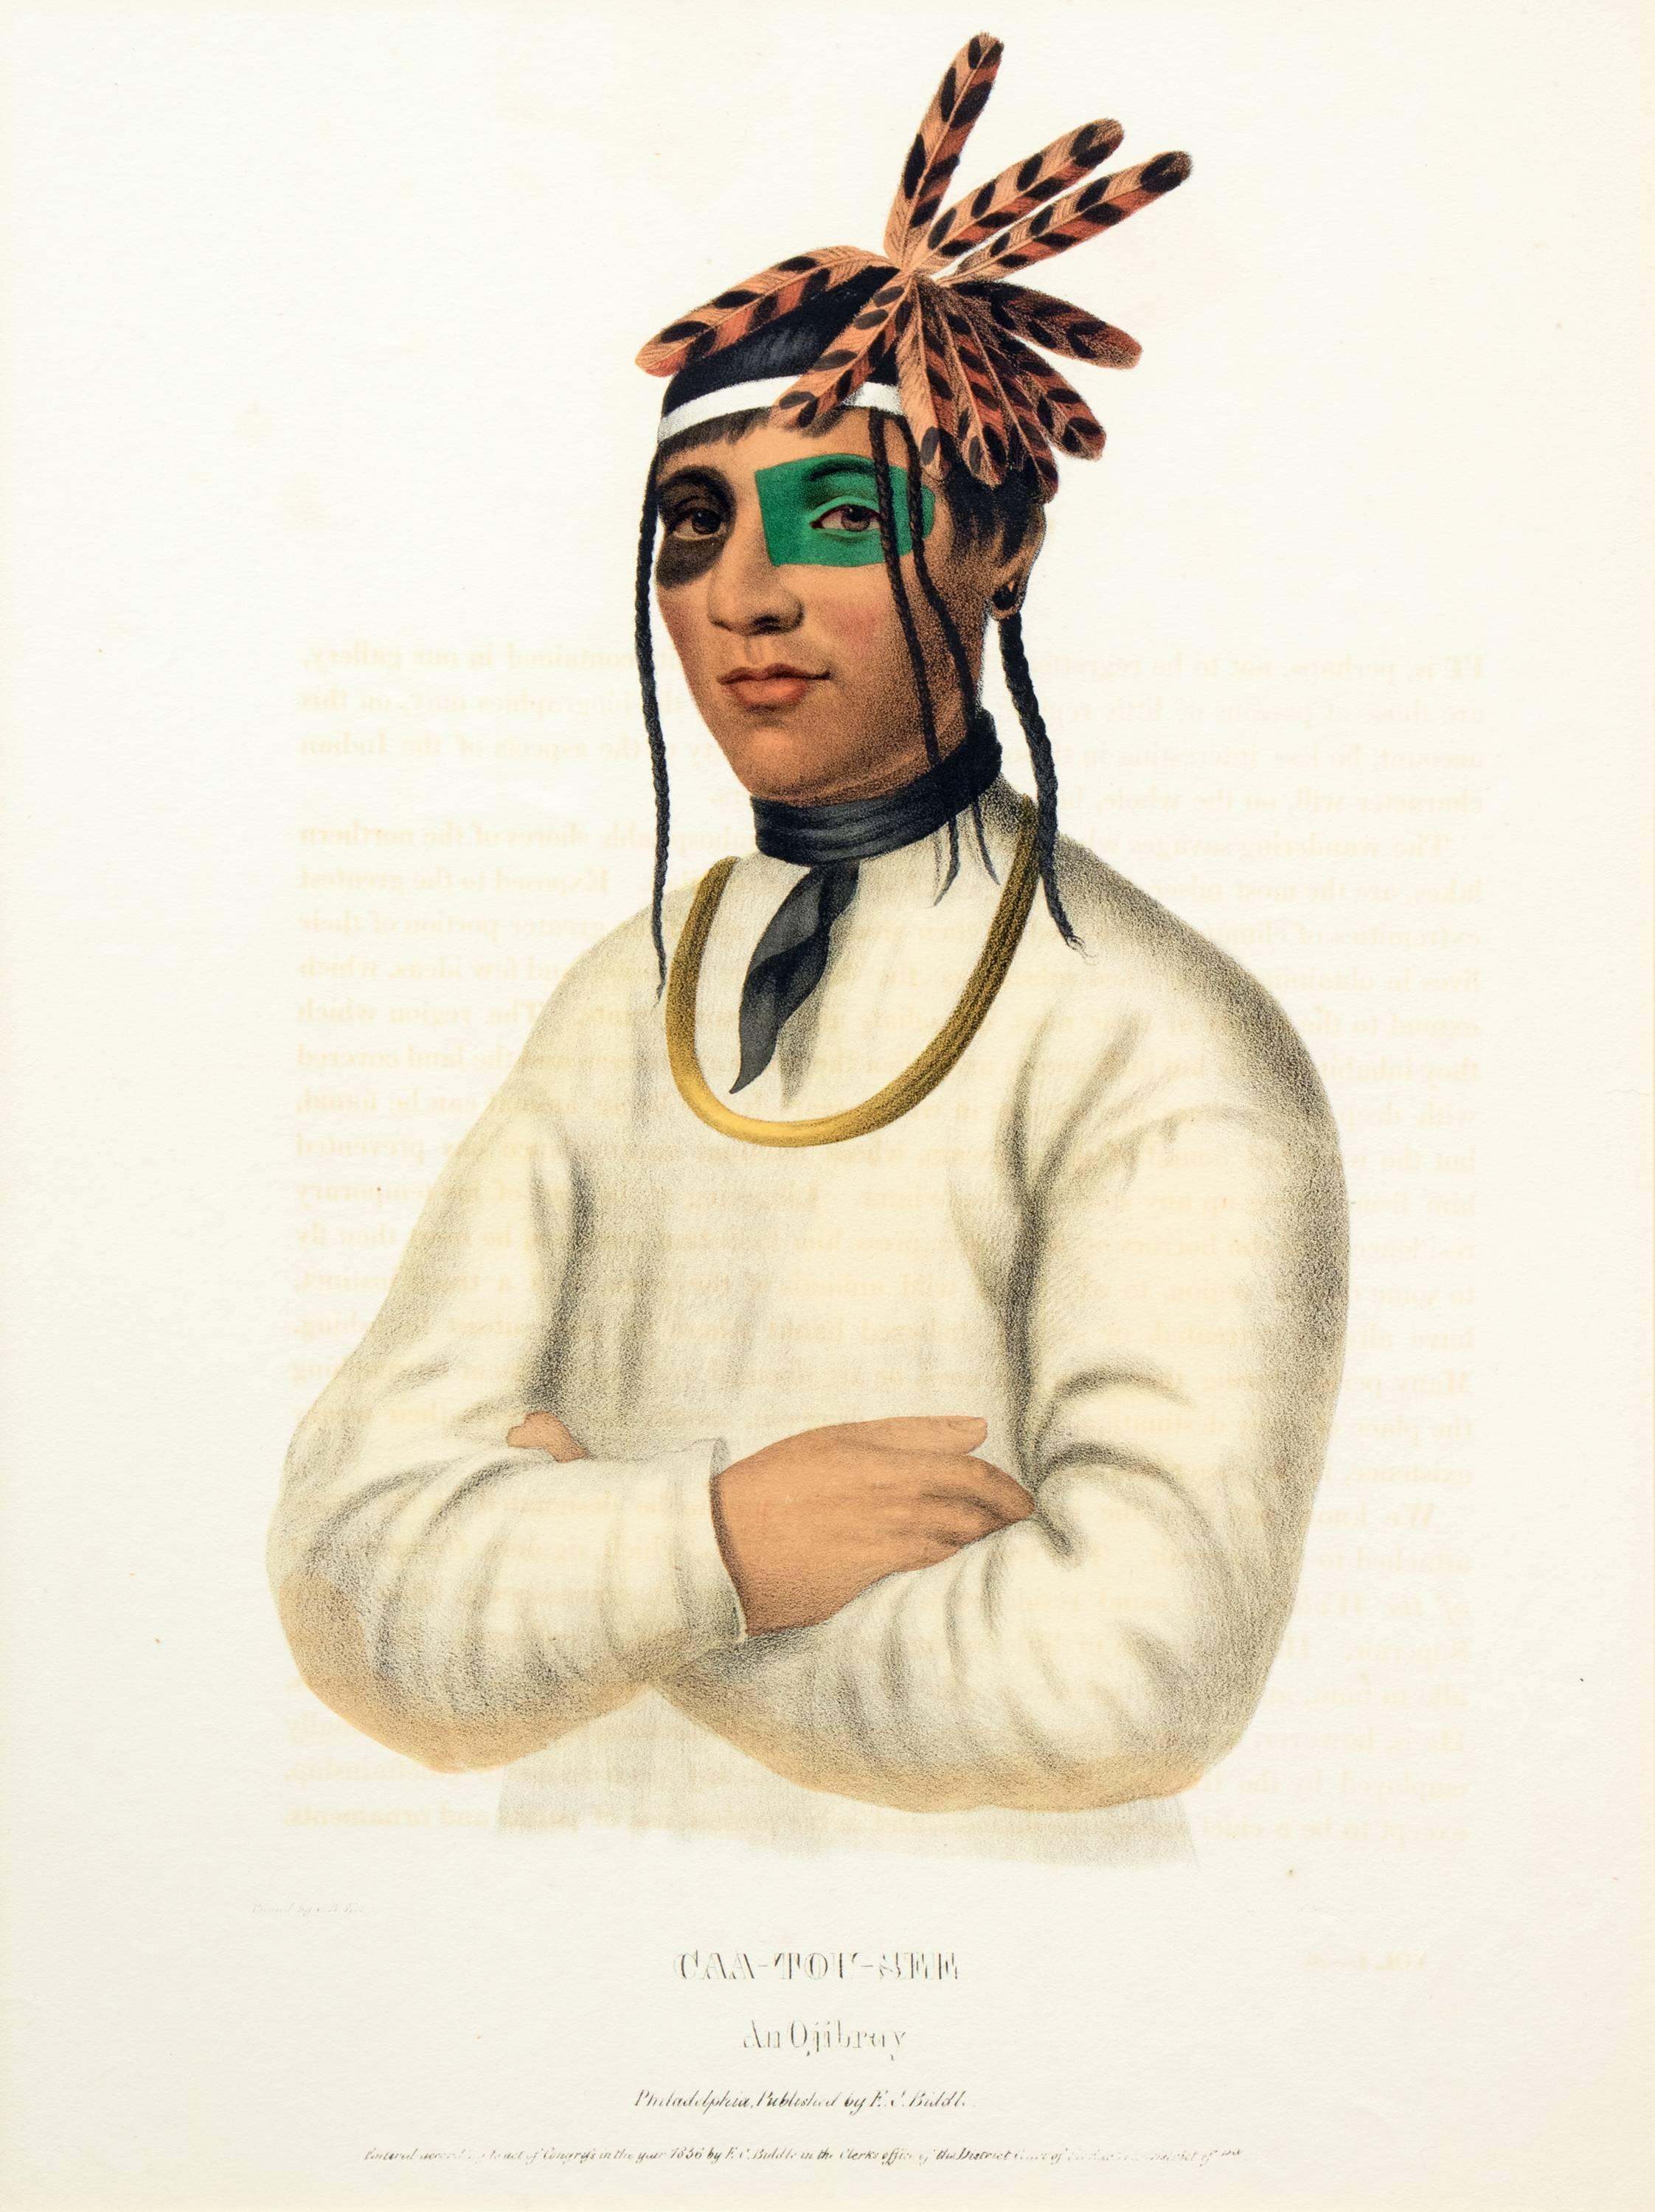 Native American Four Original McKenney & Hall Hand-Colored Lithographs, circa 1837-1844